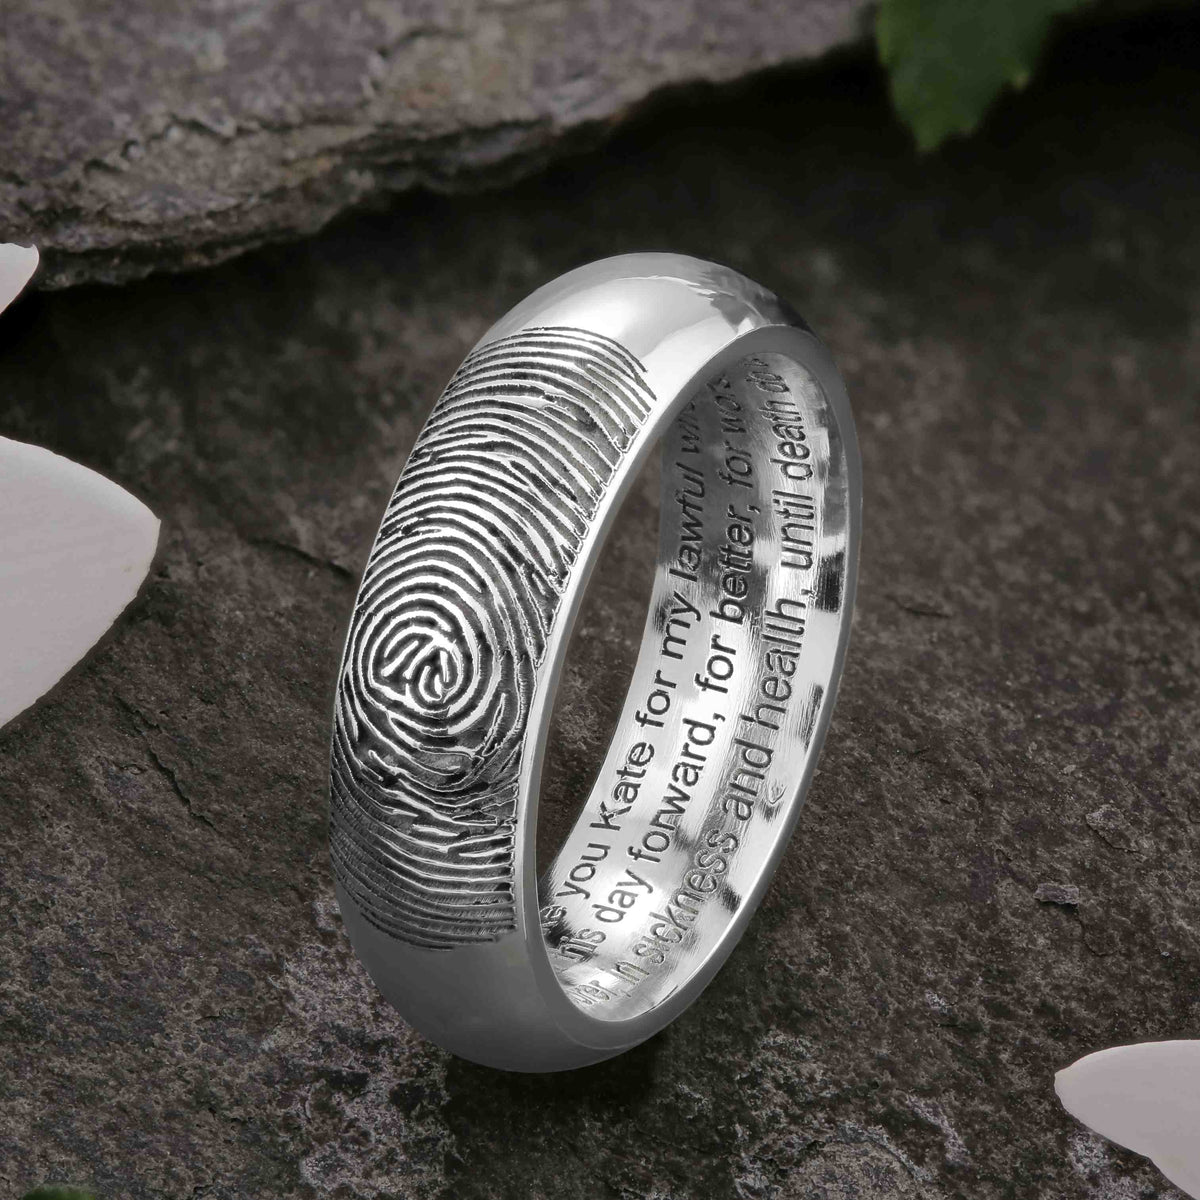 14K Gold Inside Engraved Ring [7mm width] Hawaiian Heritage Design